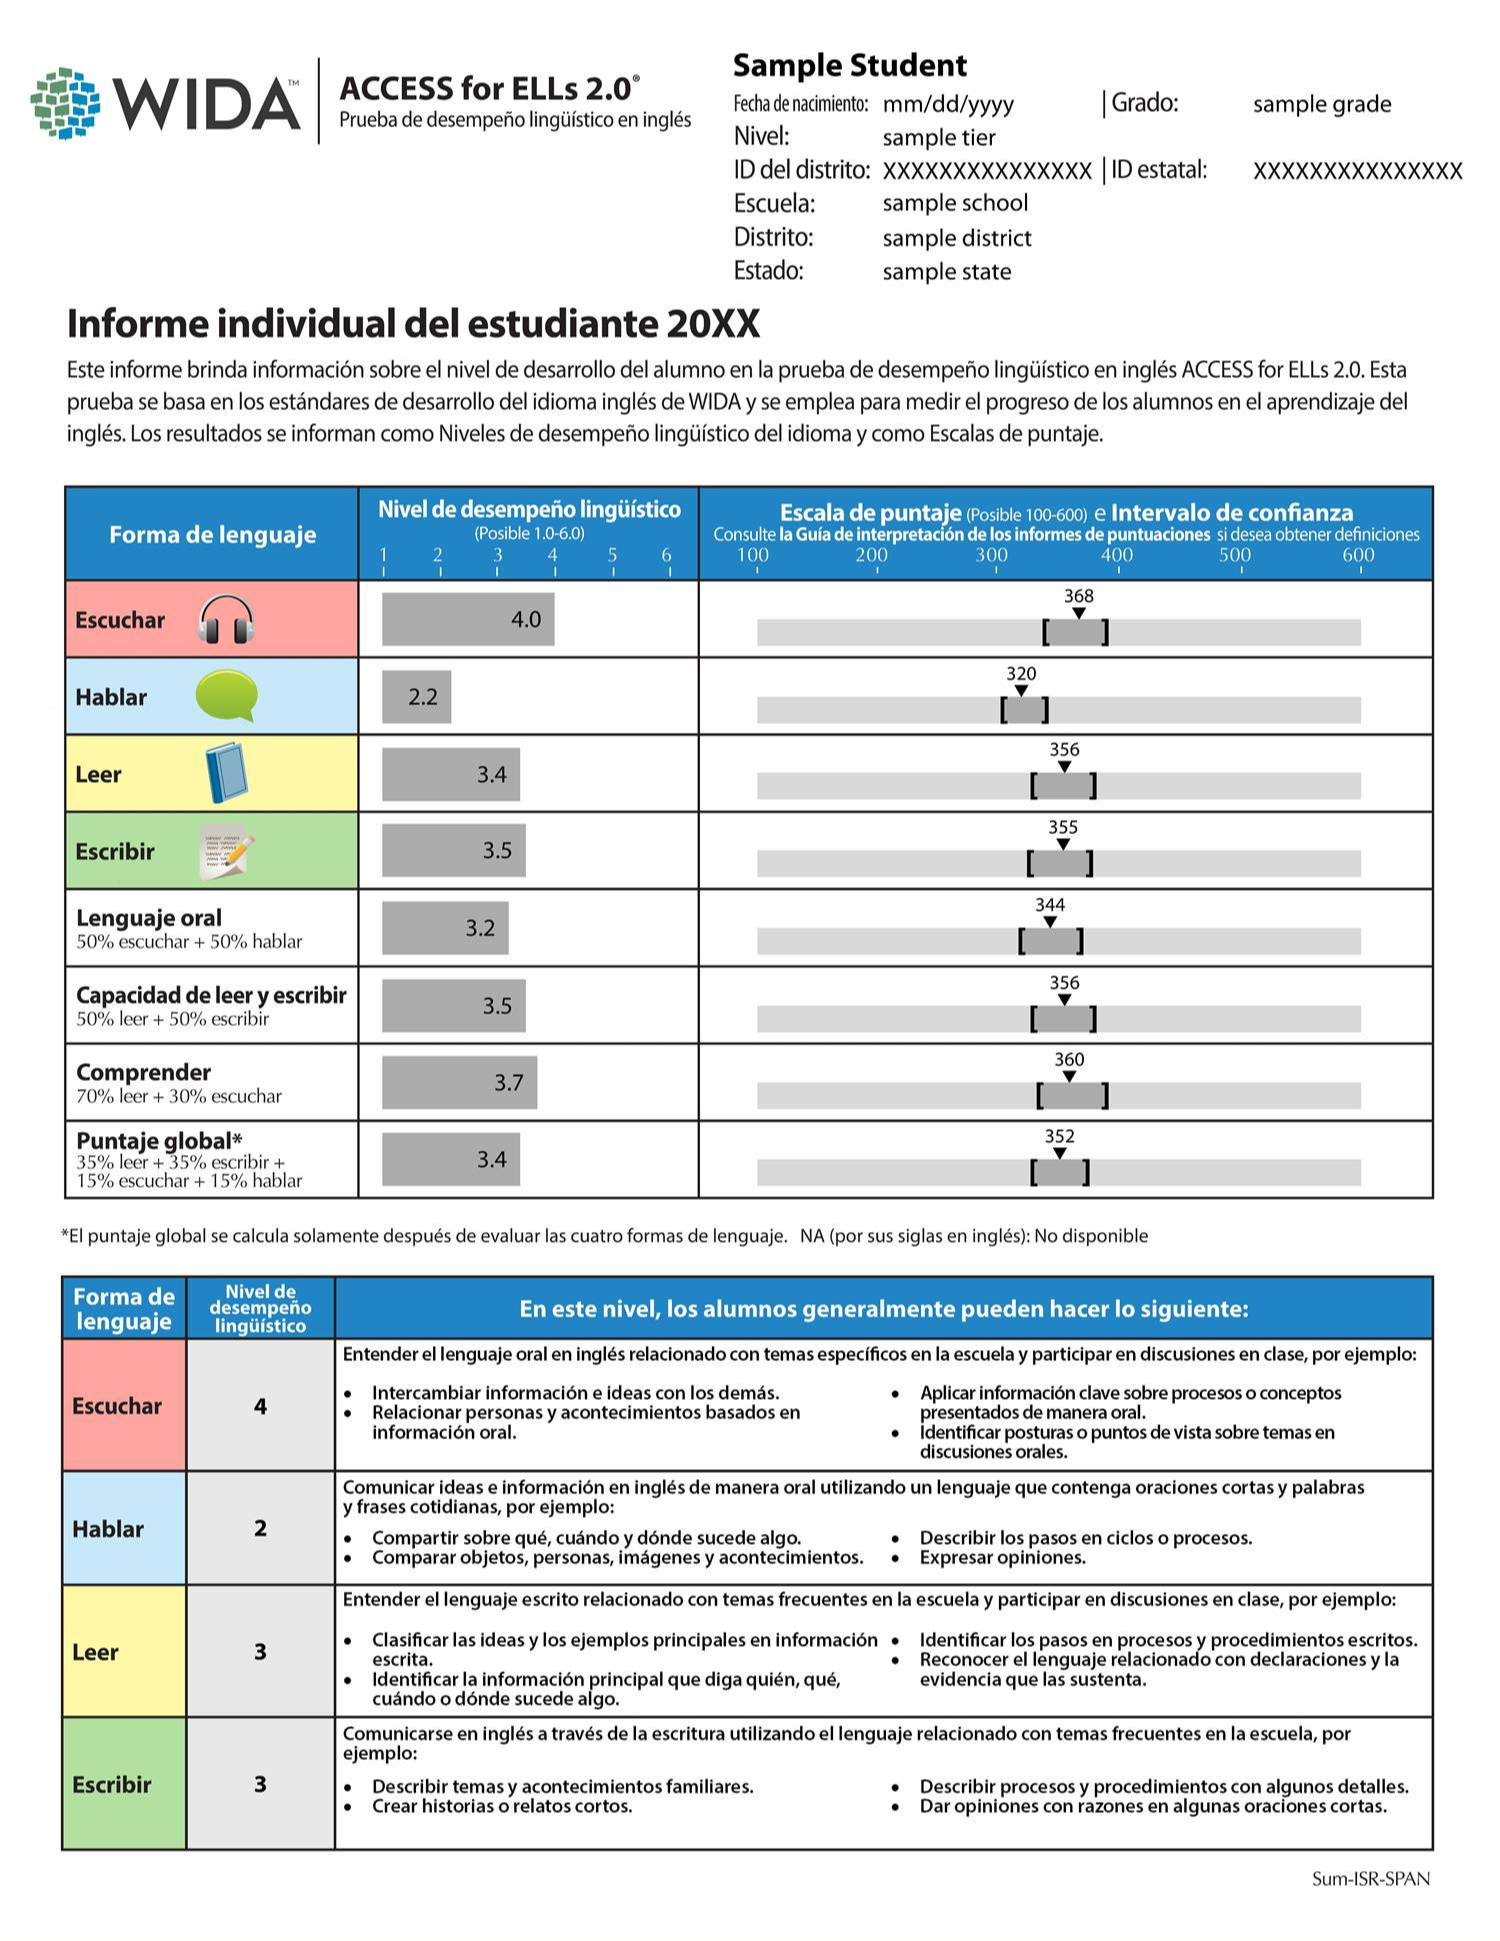 Sample Student Score Report -Spanish